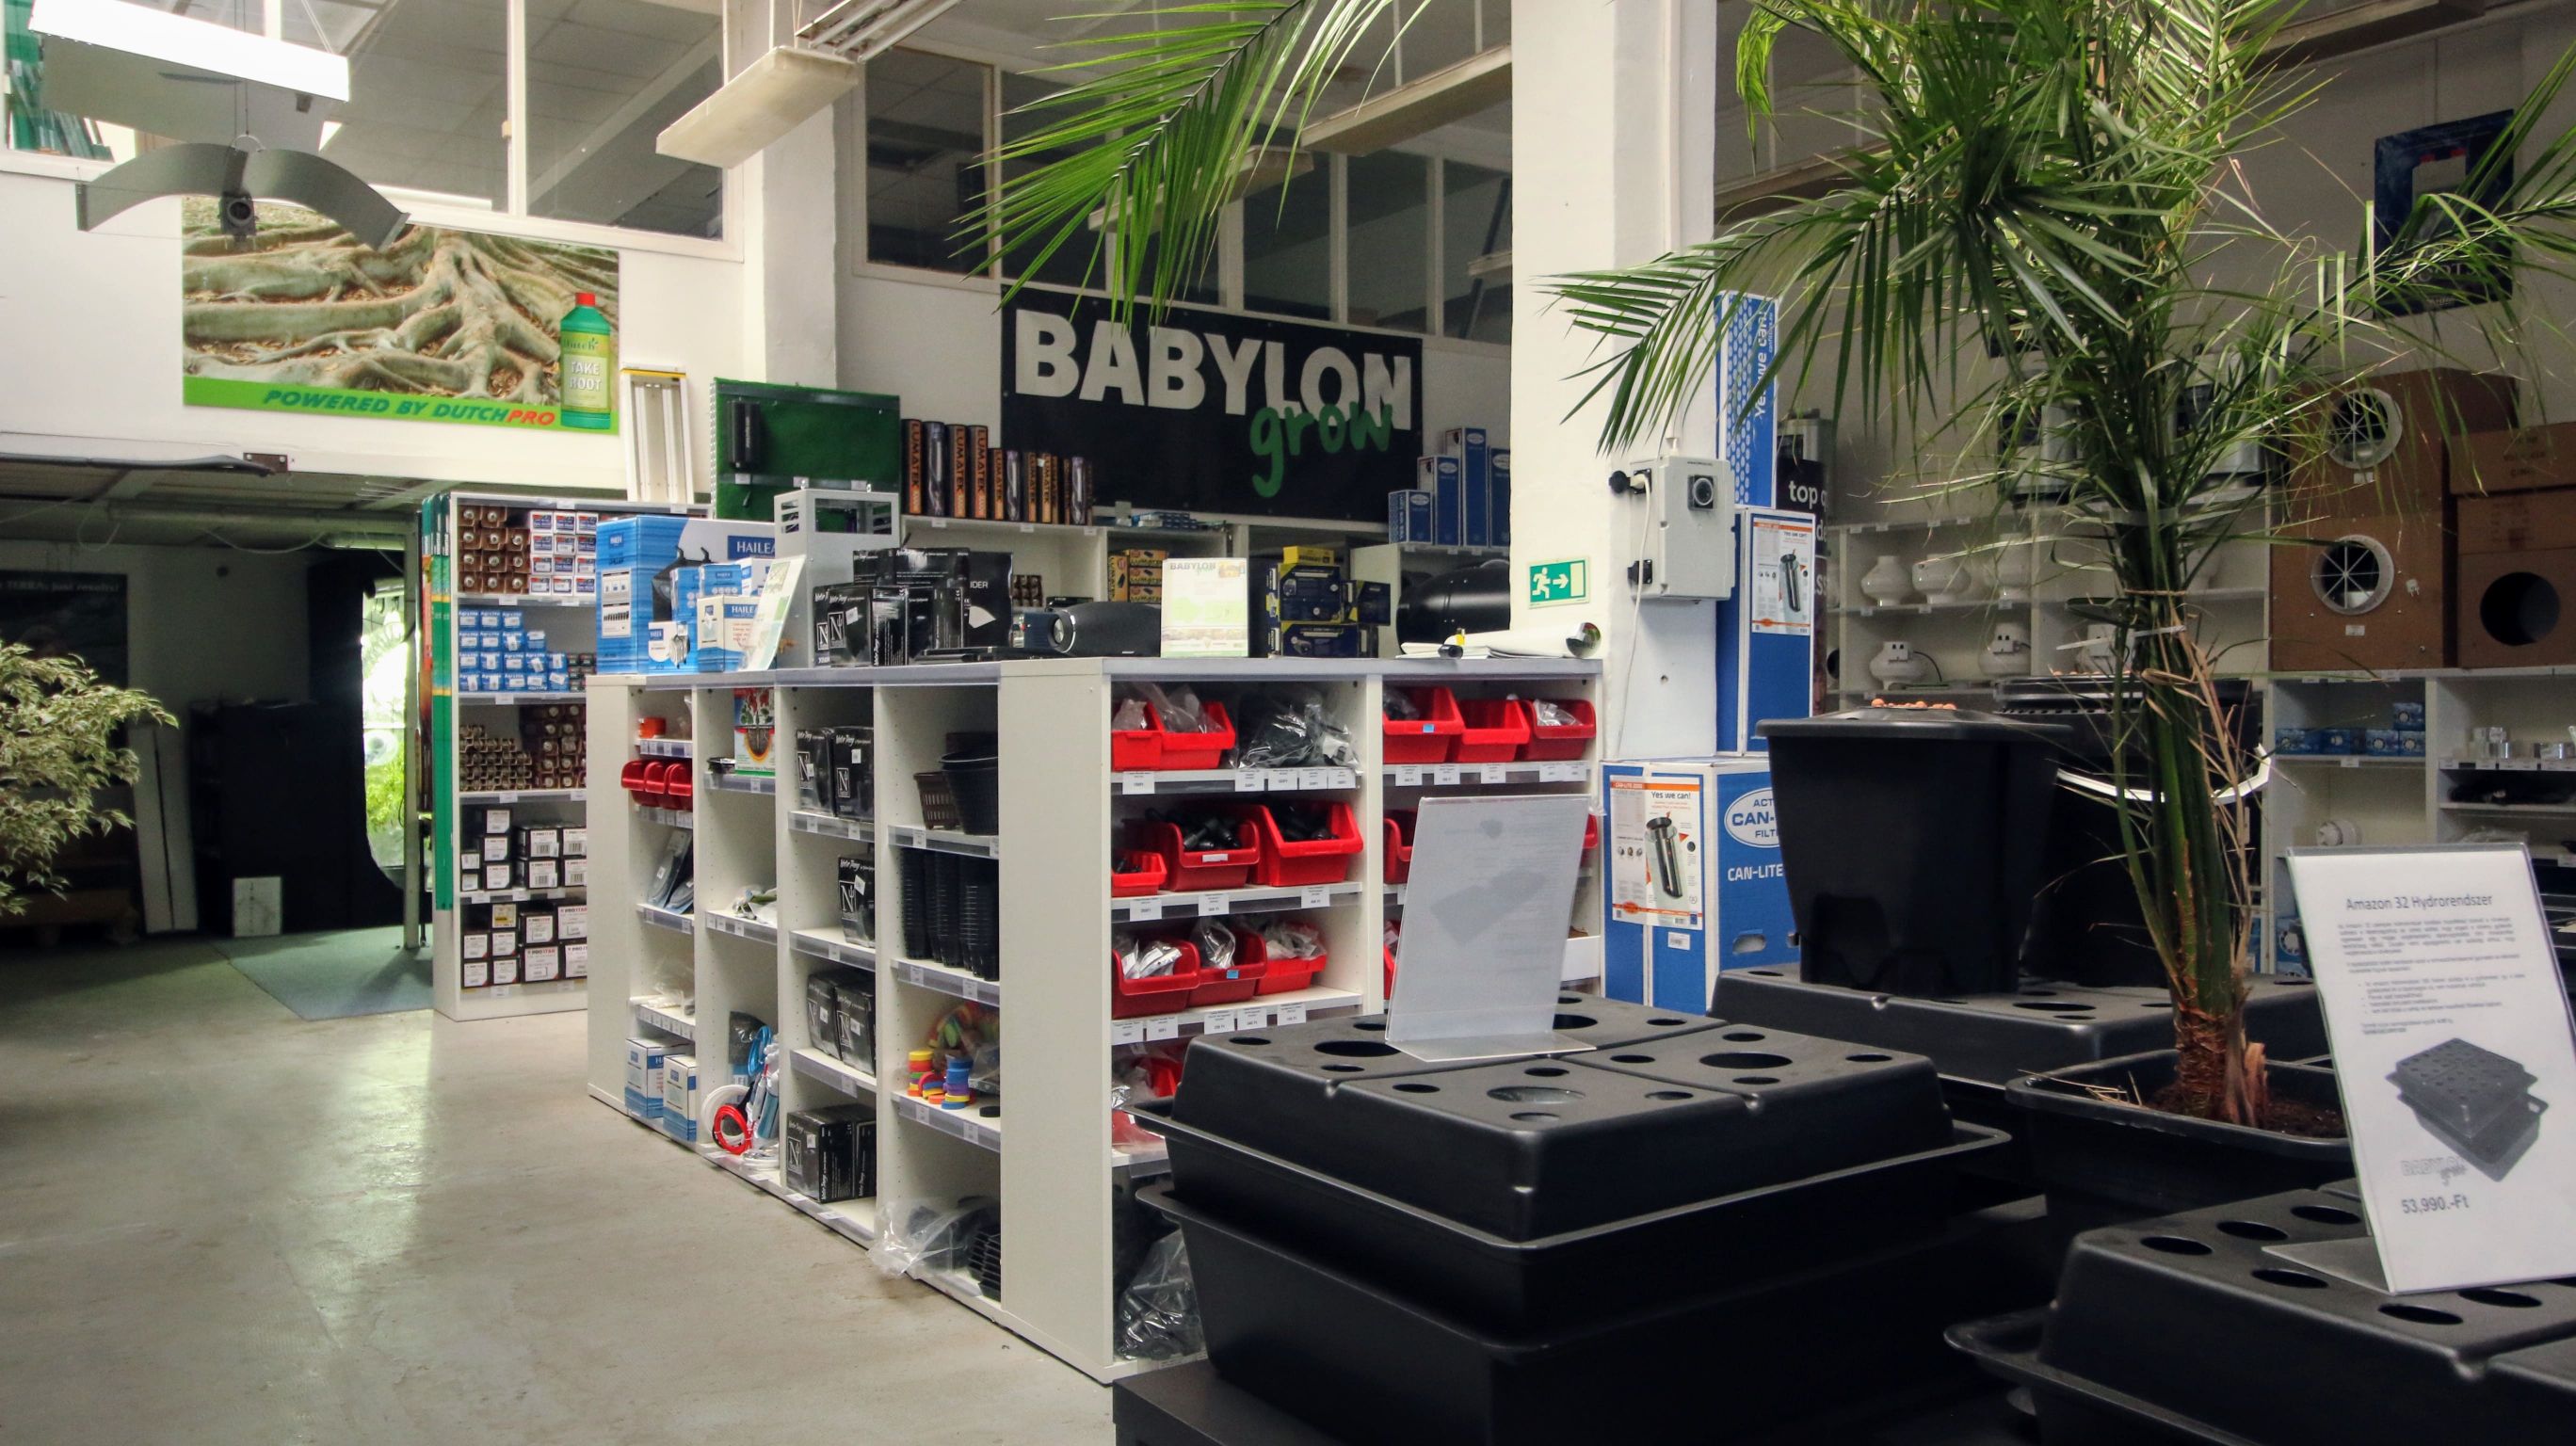 Babylon Grow Shop 1